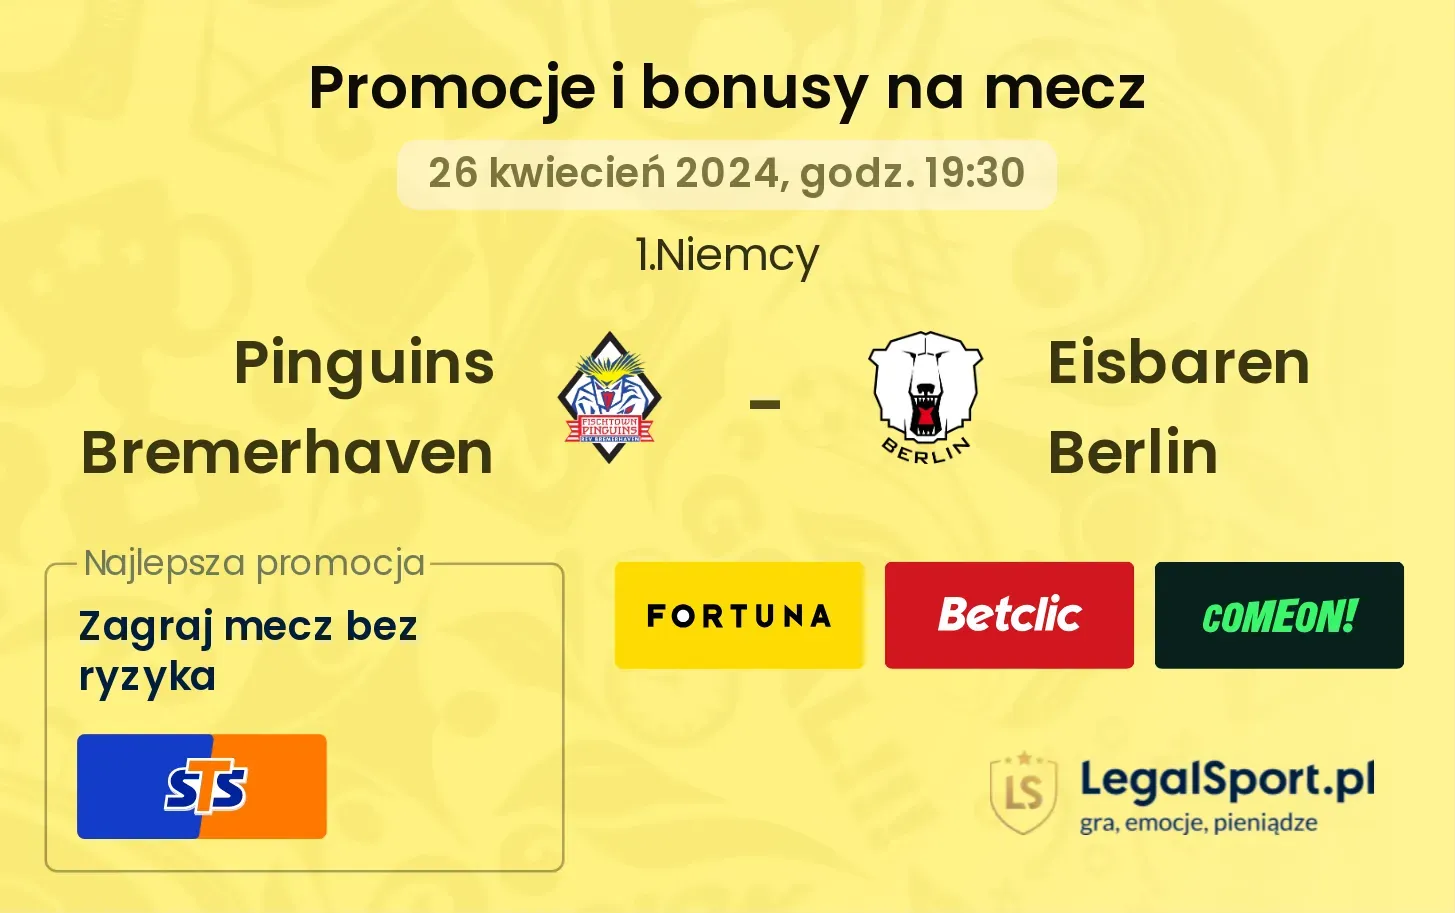 Pinguins Bremerhaven -  Eisbaren Berlin bonusy i promocje (26.04, 19:30)